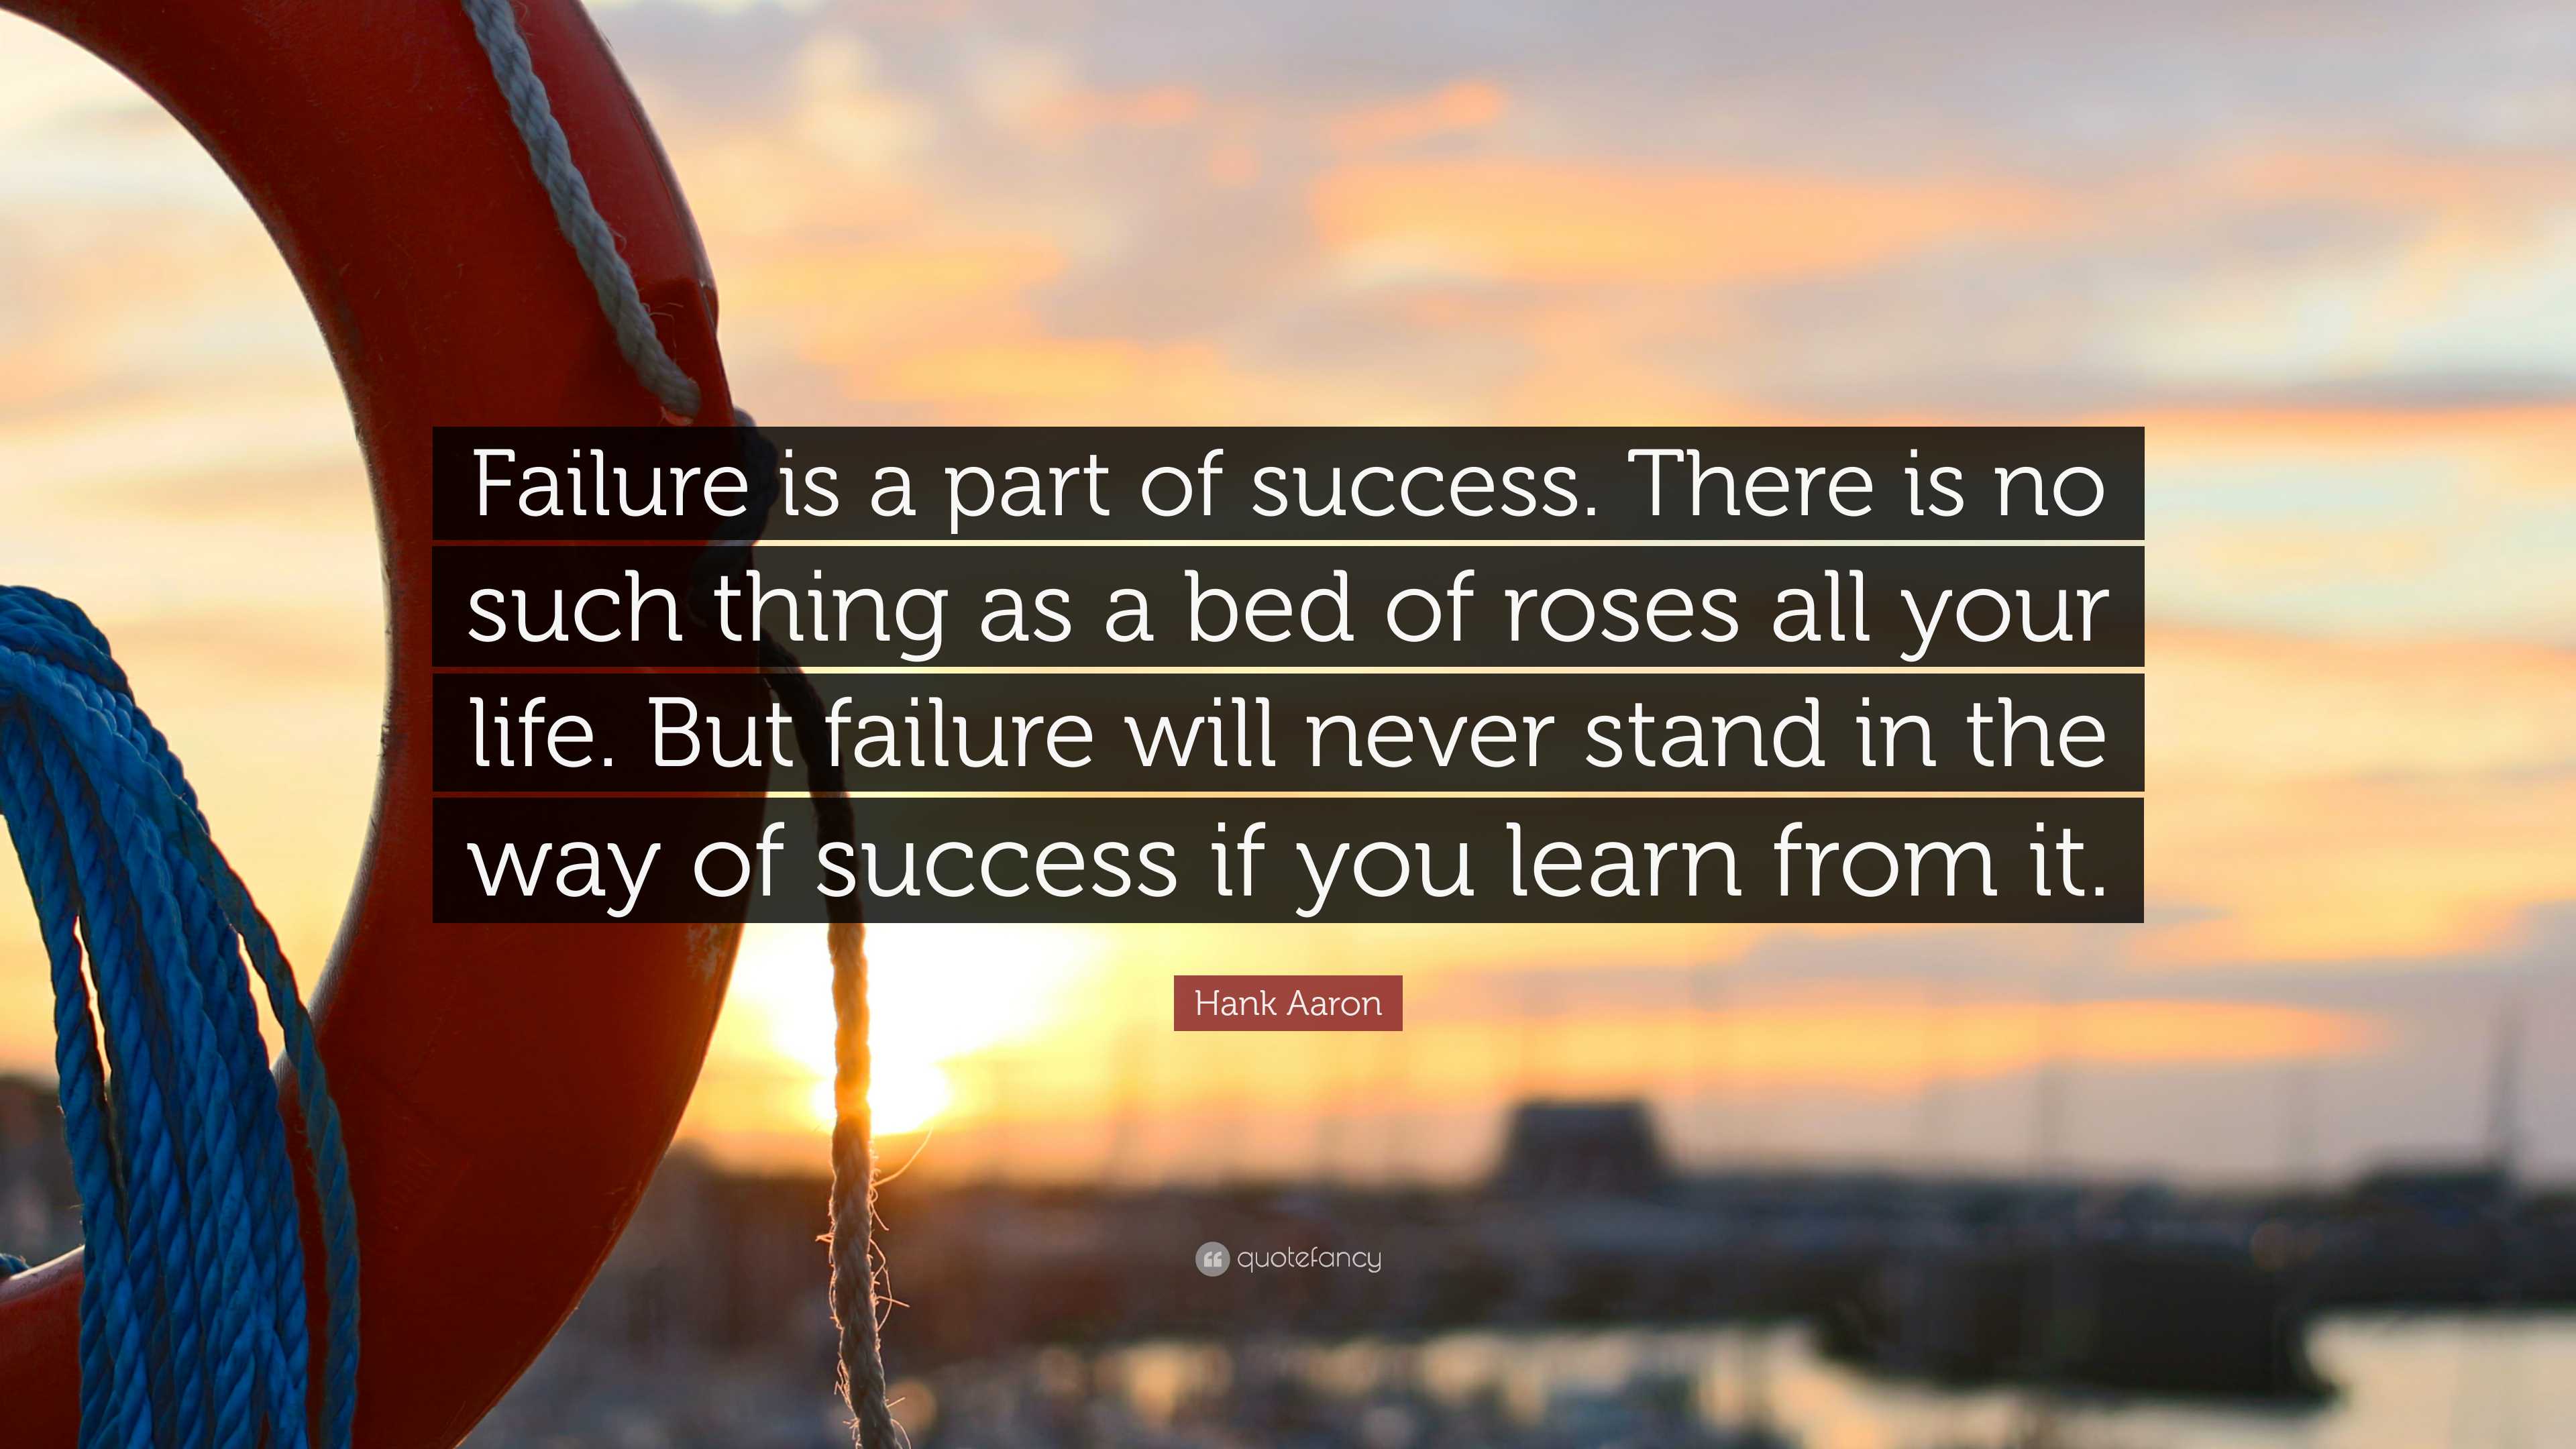 Failure is a part of success. - Hank Aaron quotes fridge magnet, White